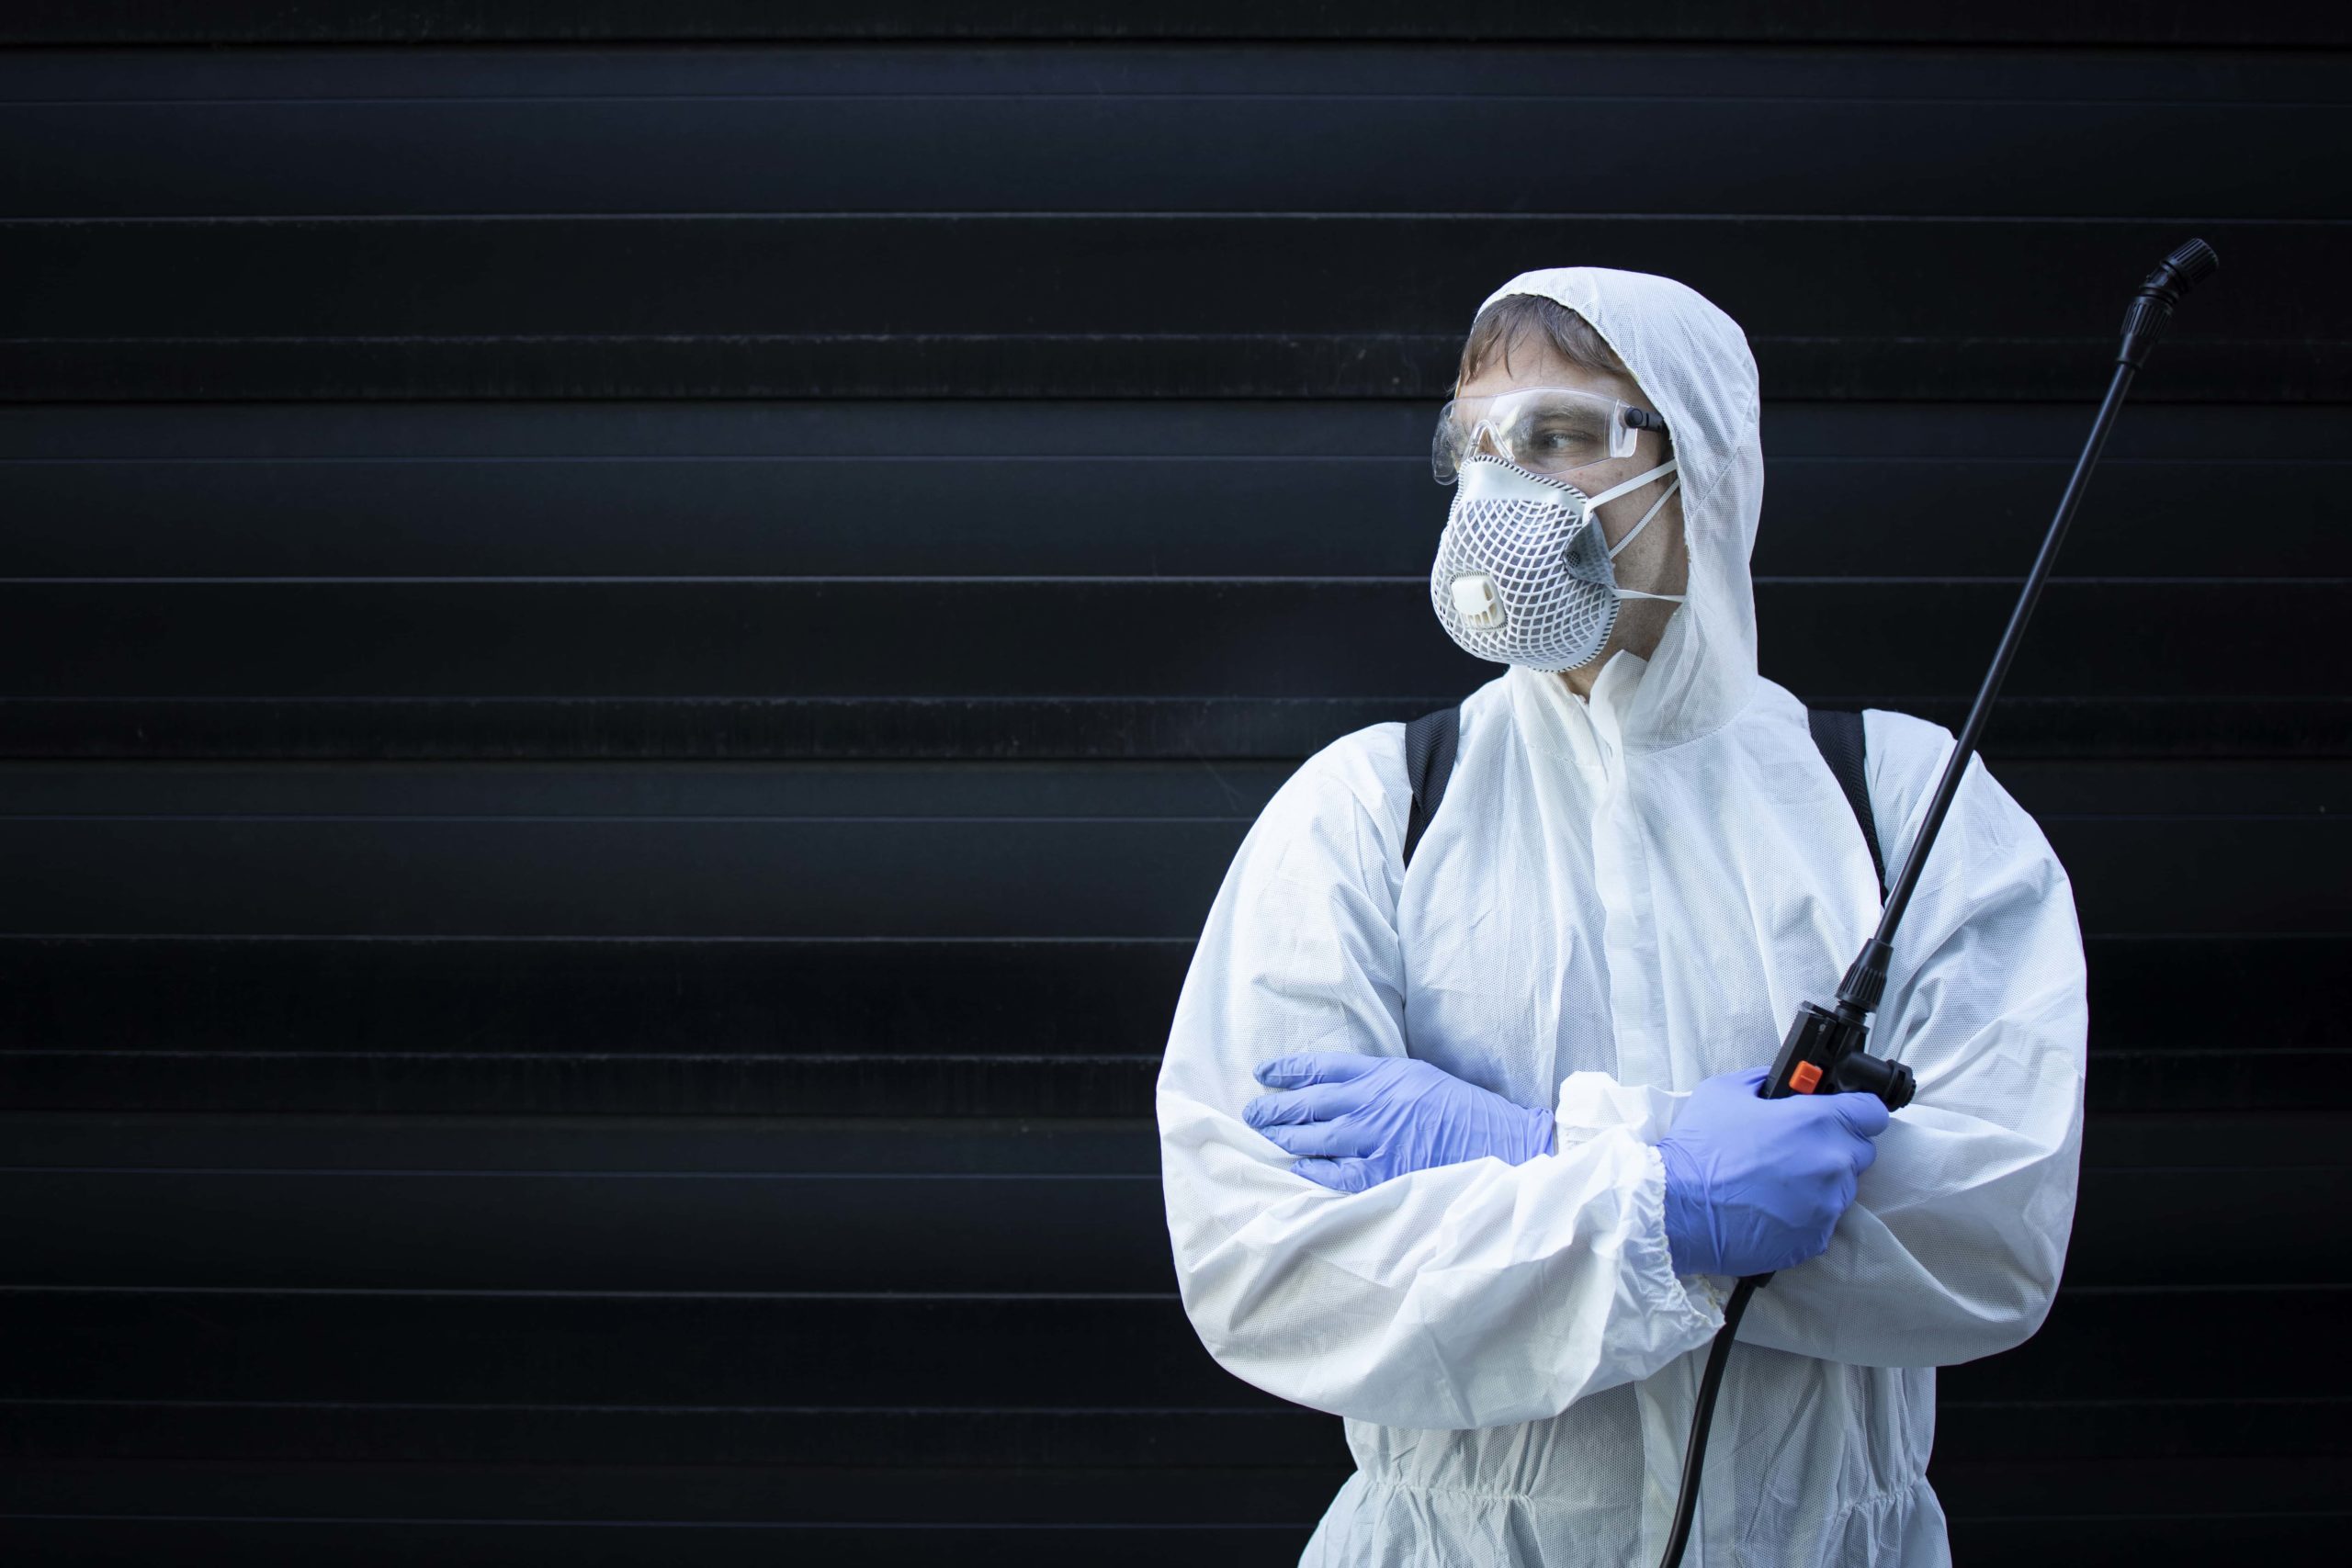 portrait professional exterminator holding sprayer with chemicals pest control